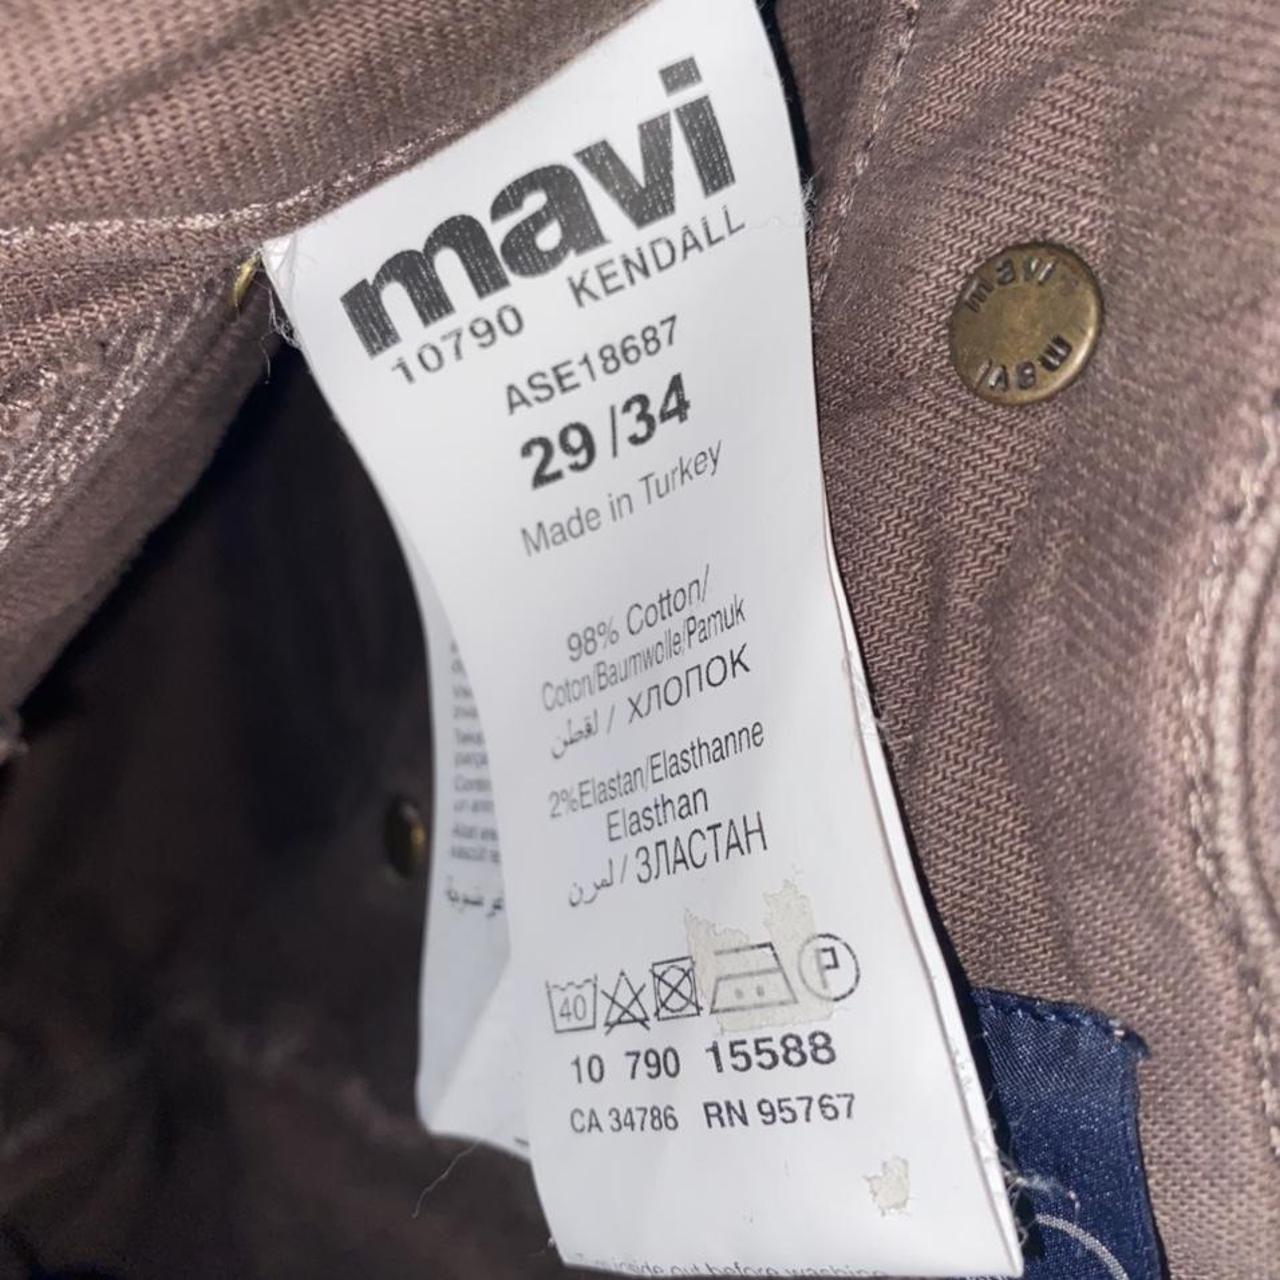 Product Image 3 - Mavi  Mocha Jeans

CONDITION: Used